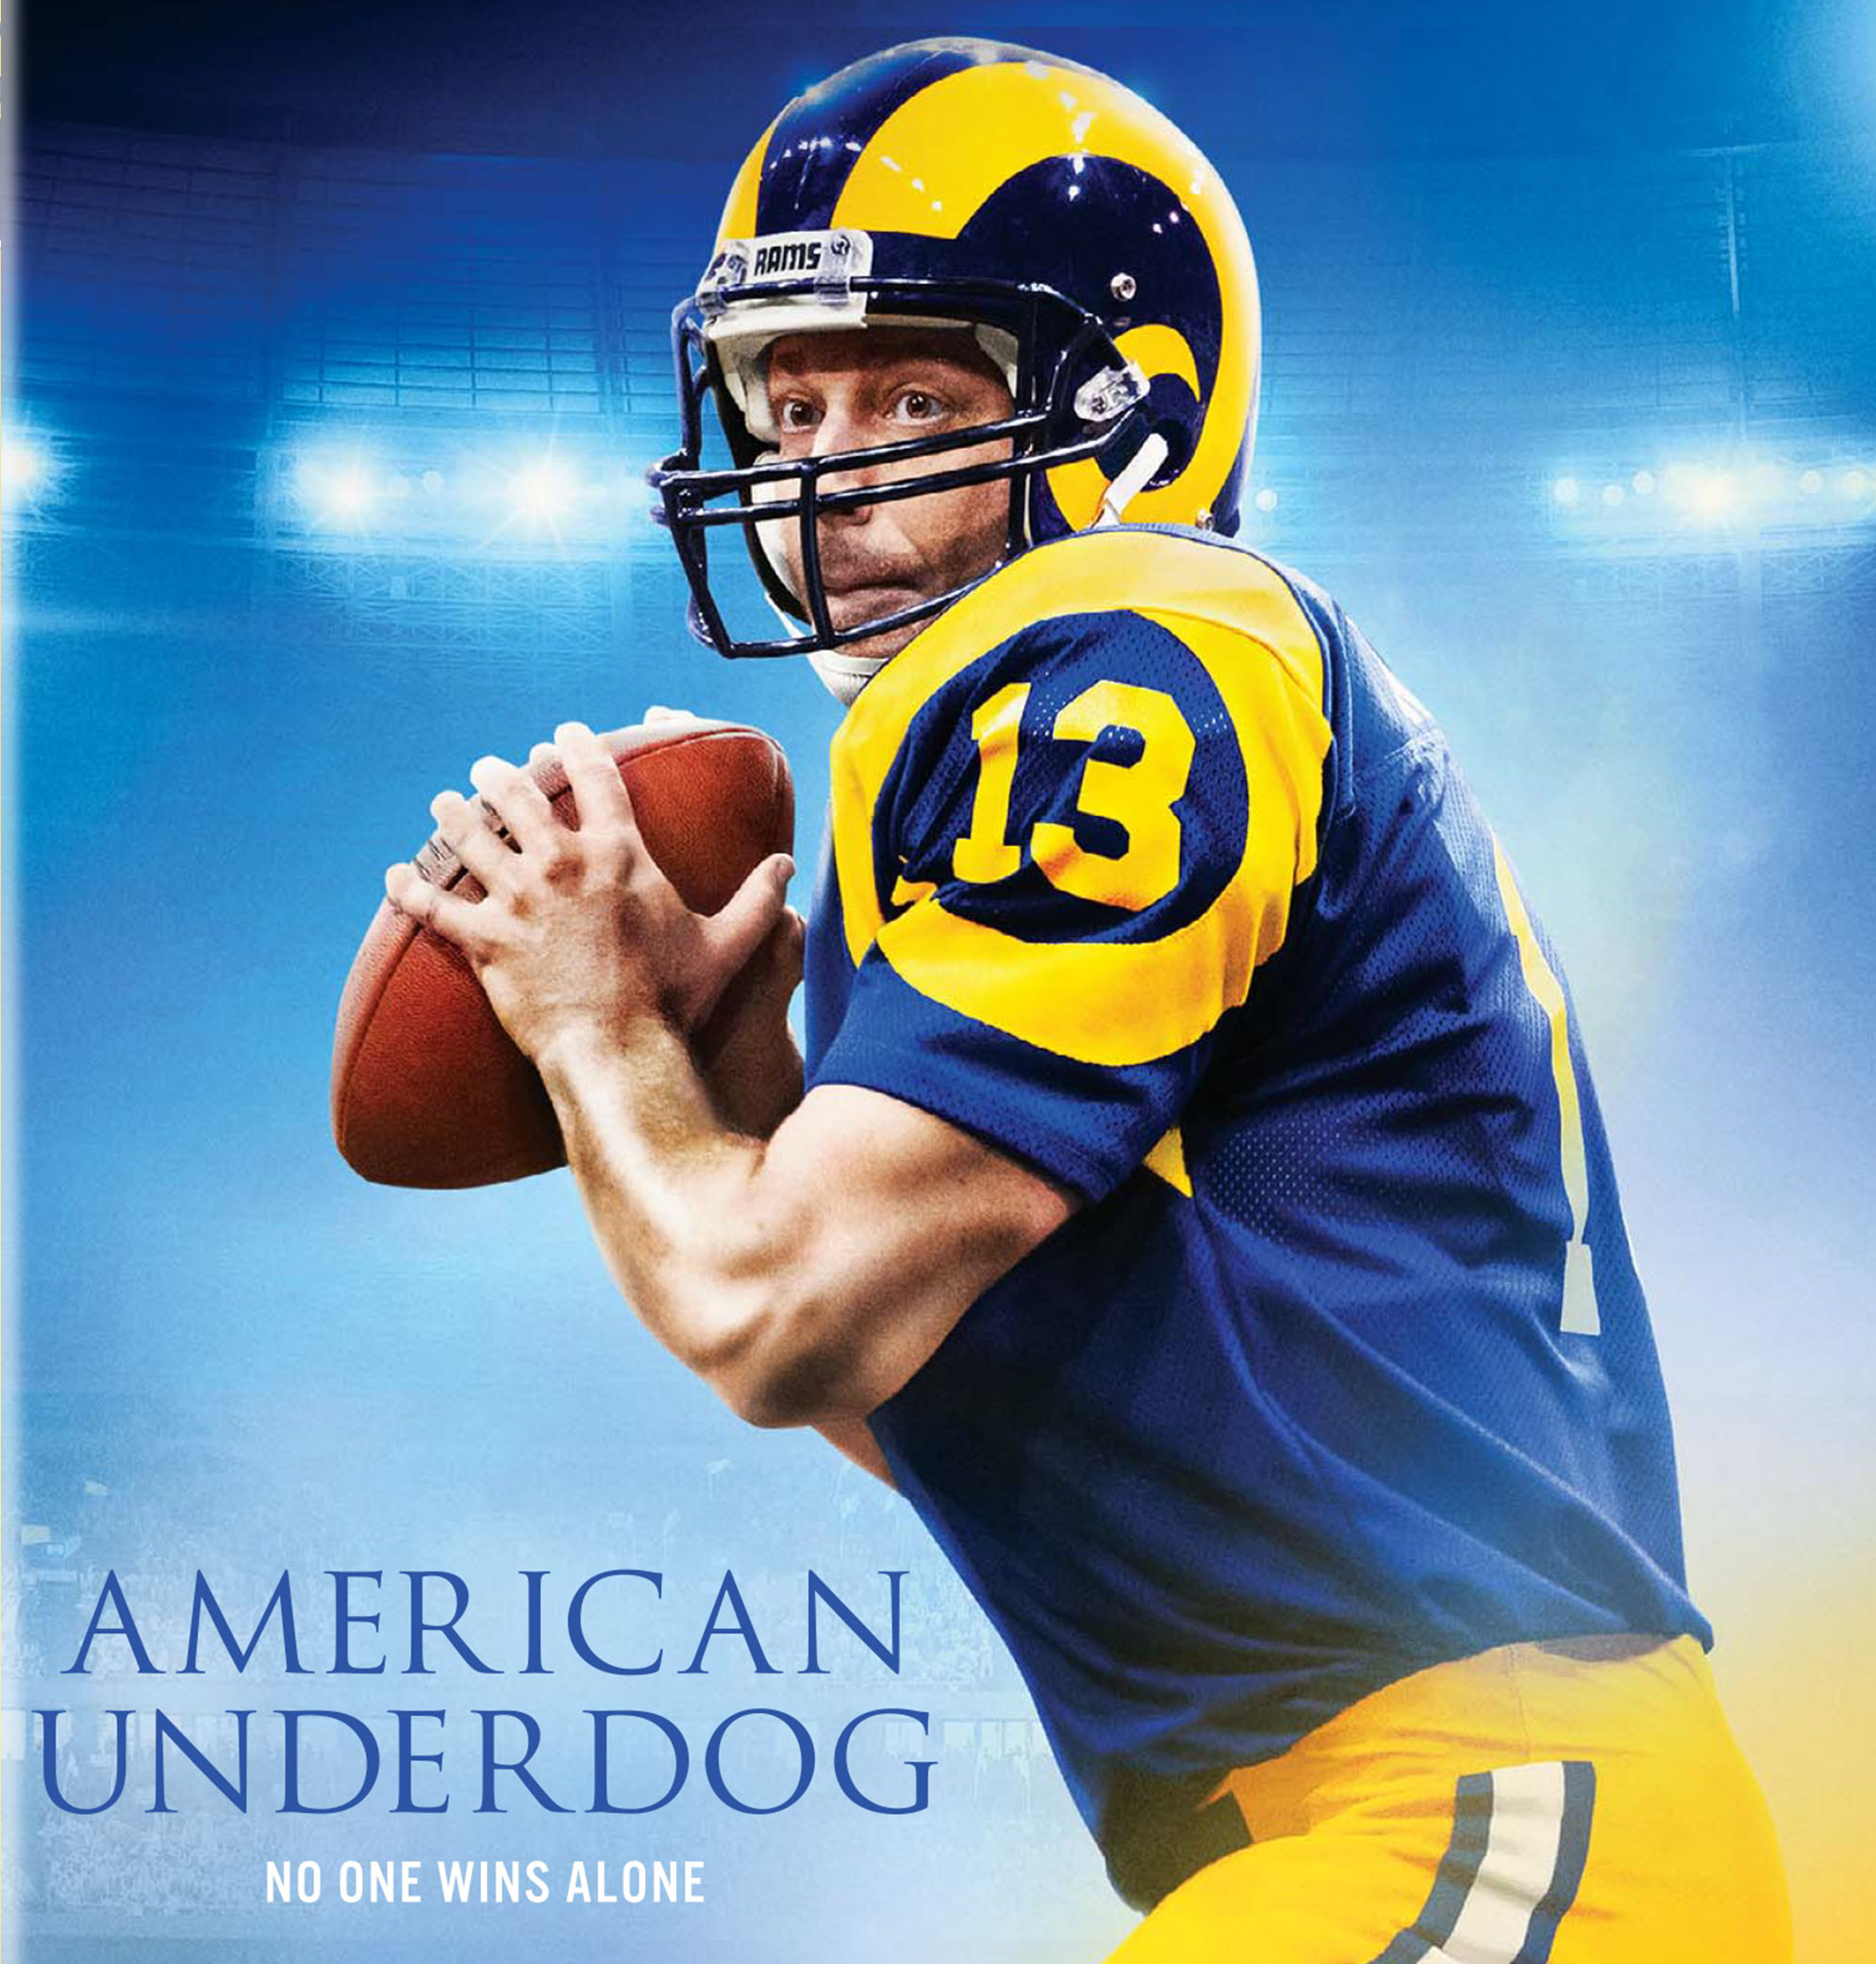 American Underdog 4K DVD Review